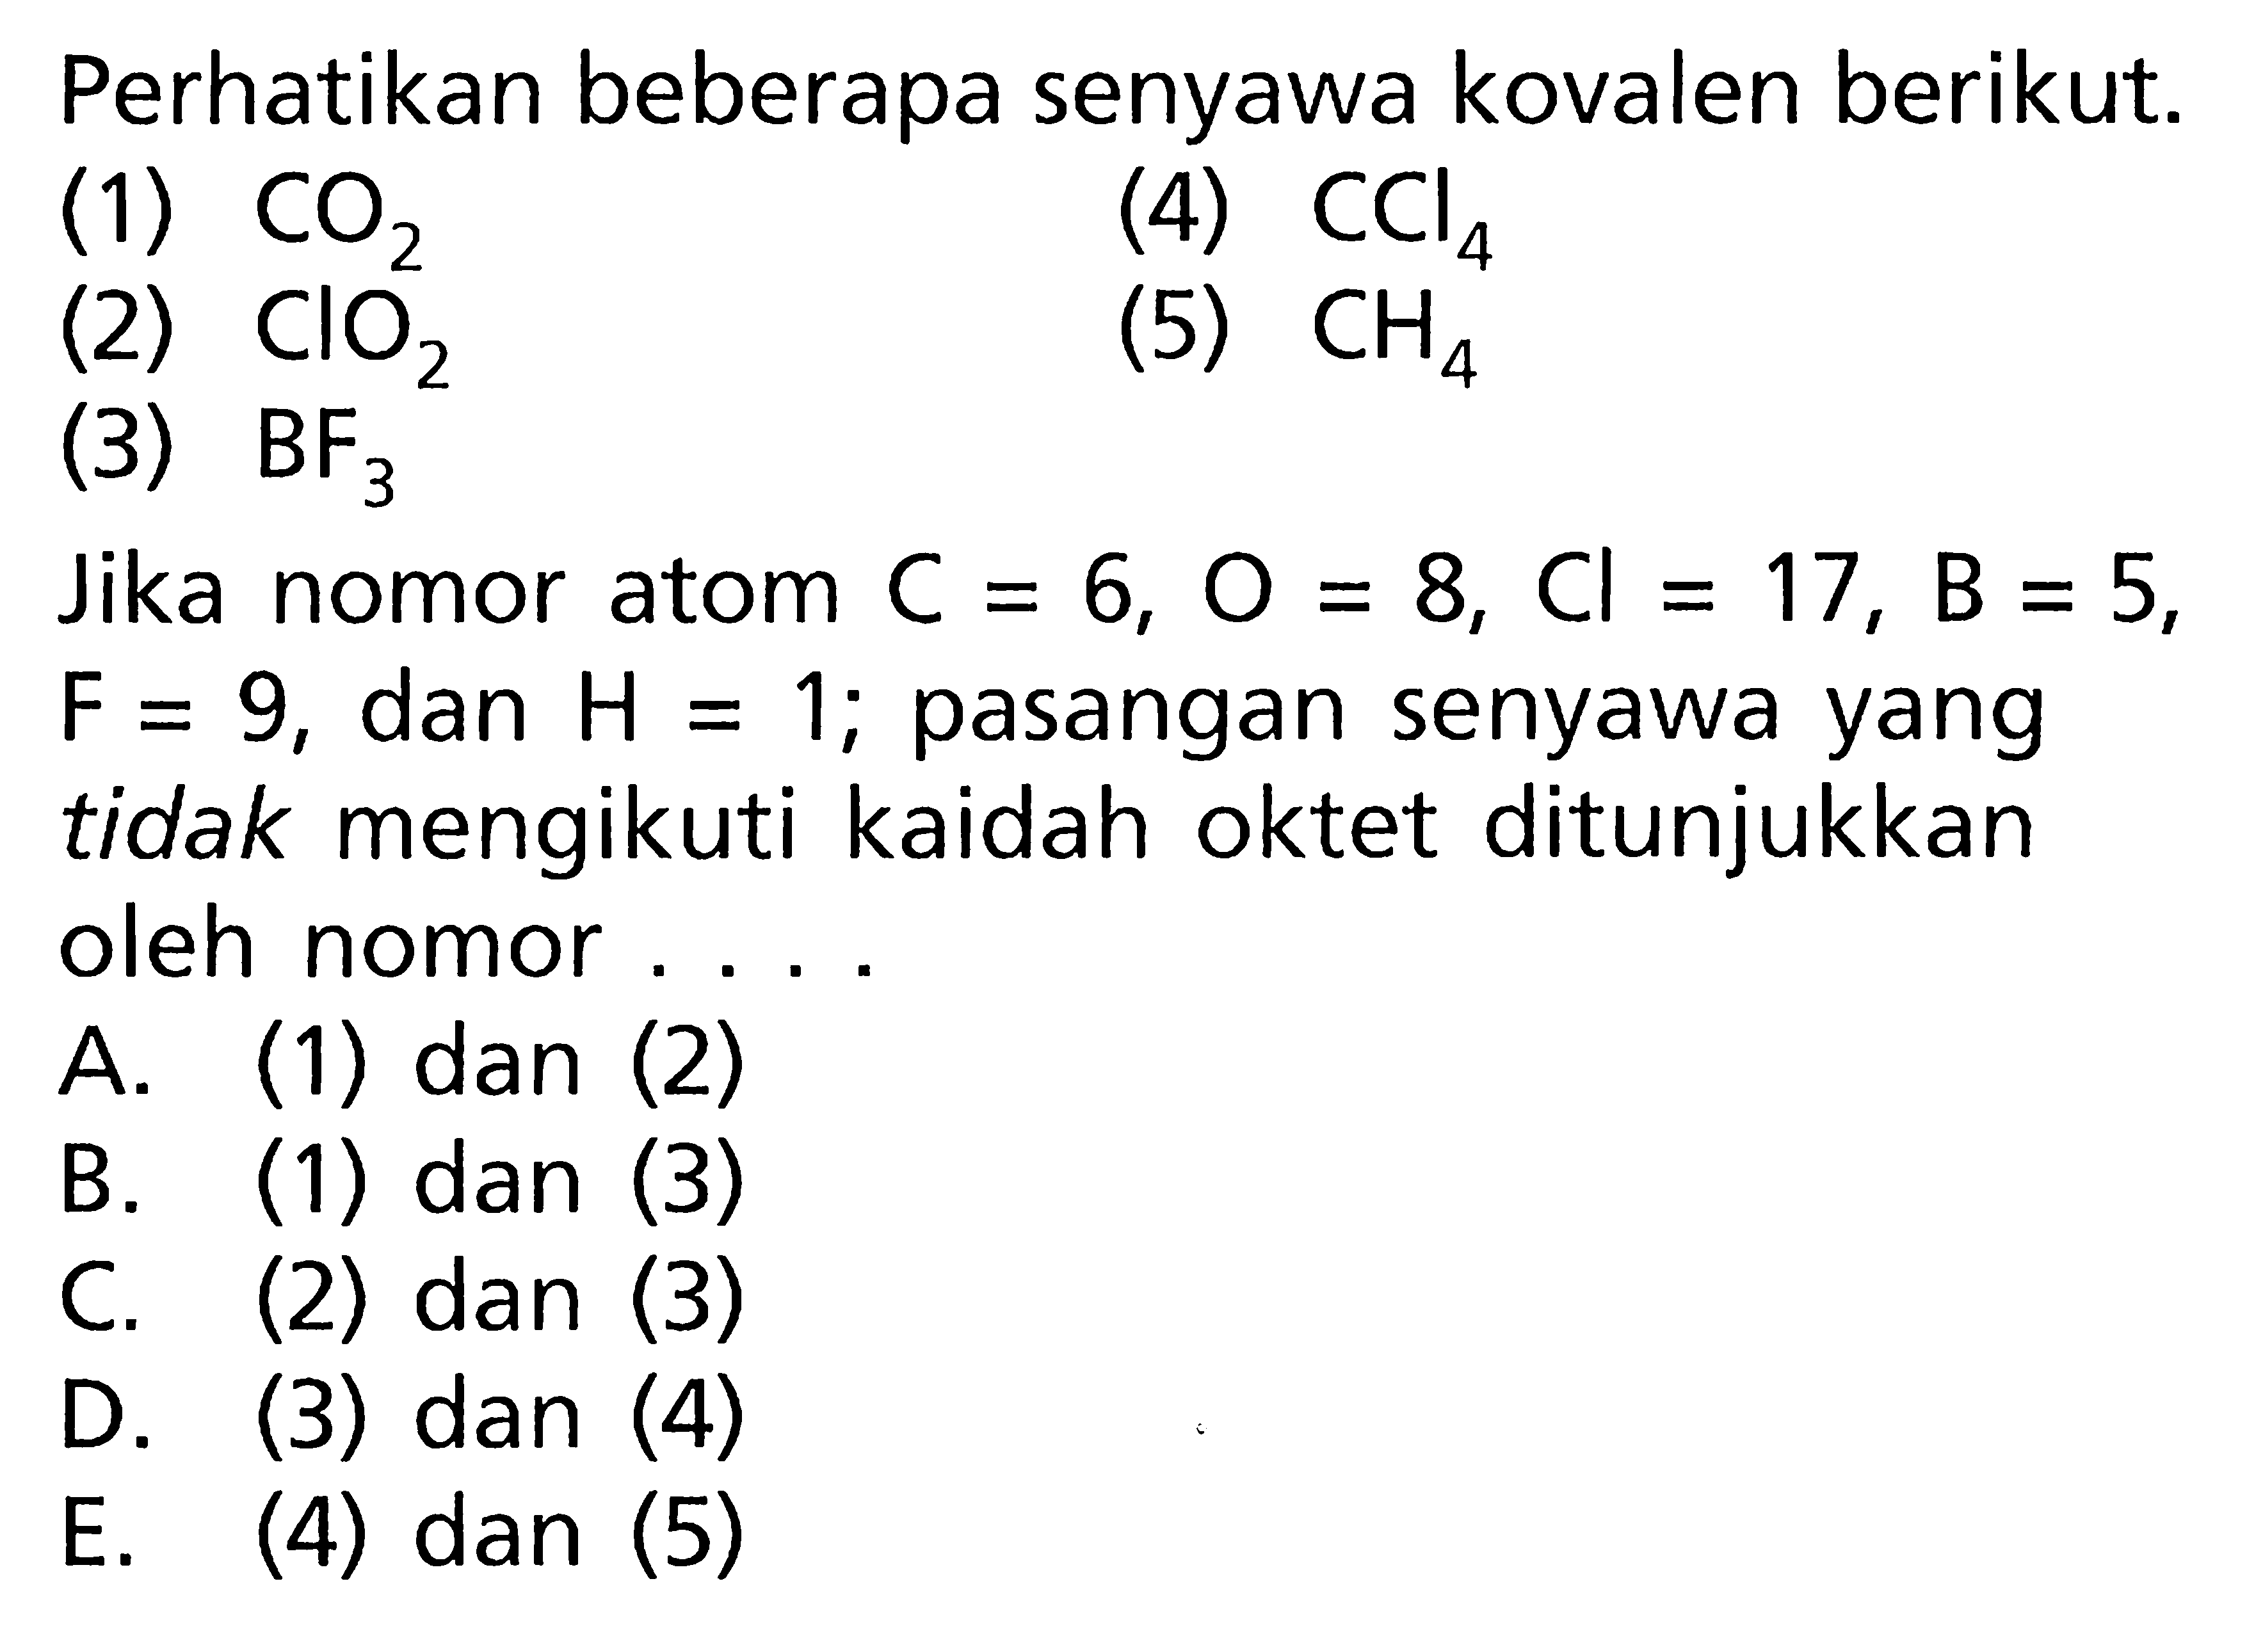 Perhatikan beberapa senyawa kovalen berikut. (1) CO2 (4) CCl4 (2) ClO2 (5) CH4 (3) BF3 Jika nomor atom C = 6, O = 8, Cl = 17, B = 5, F = 9, dan H = 1; pasangan senyawa yang tidak mengikuti kaidah oktet ditunjukkan oleh nomor ....